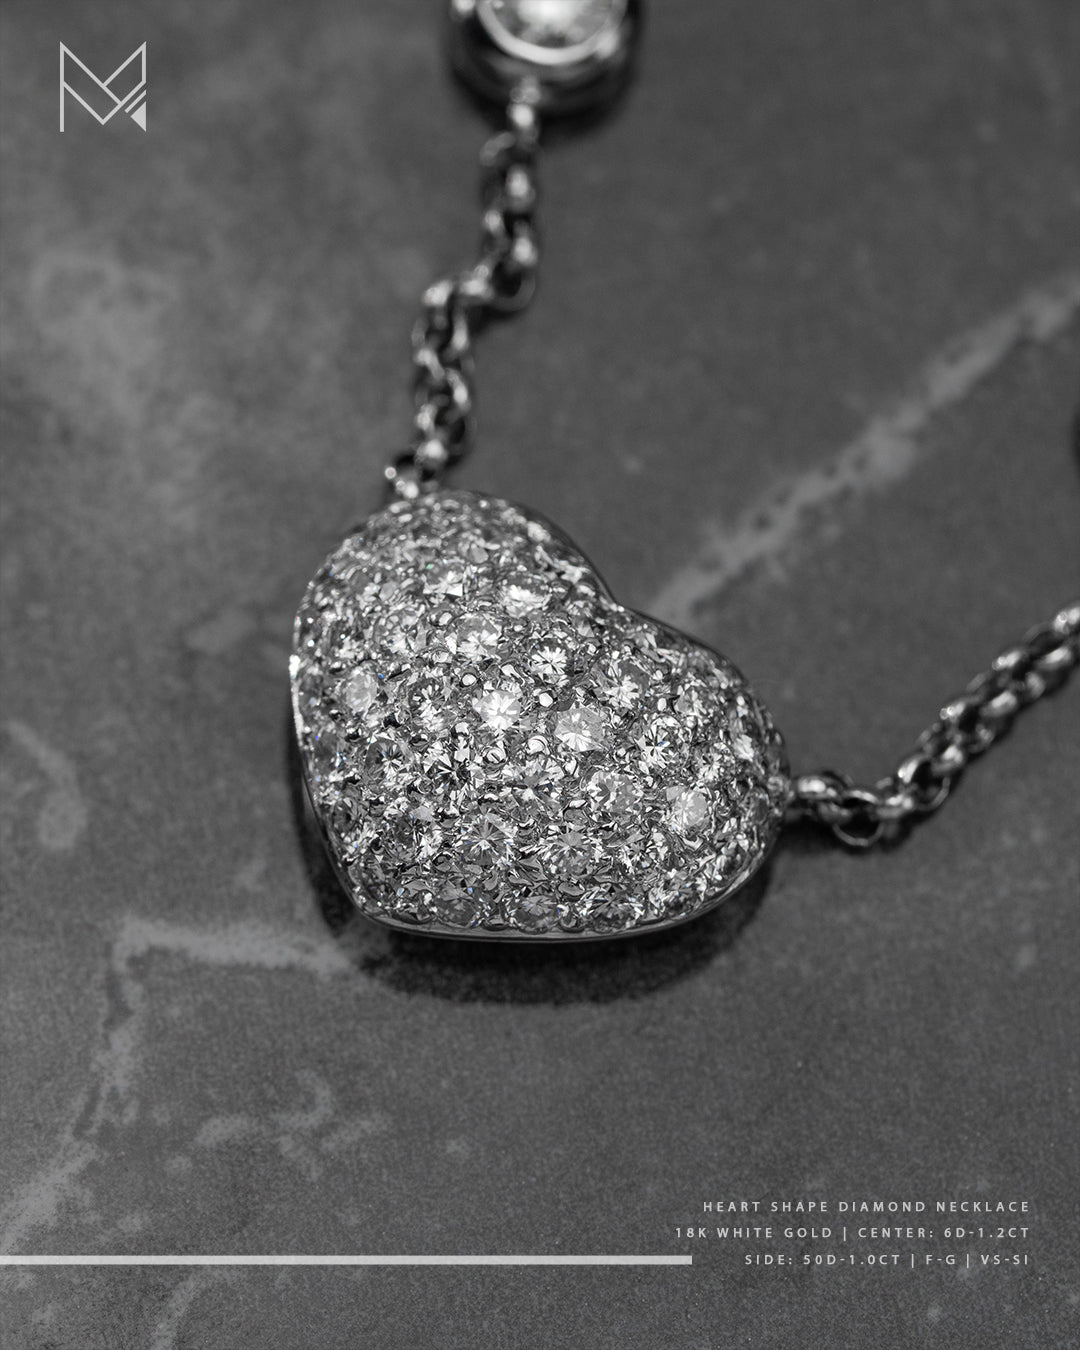 18K White Gold Heart Shape Diamond Necklace